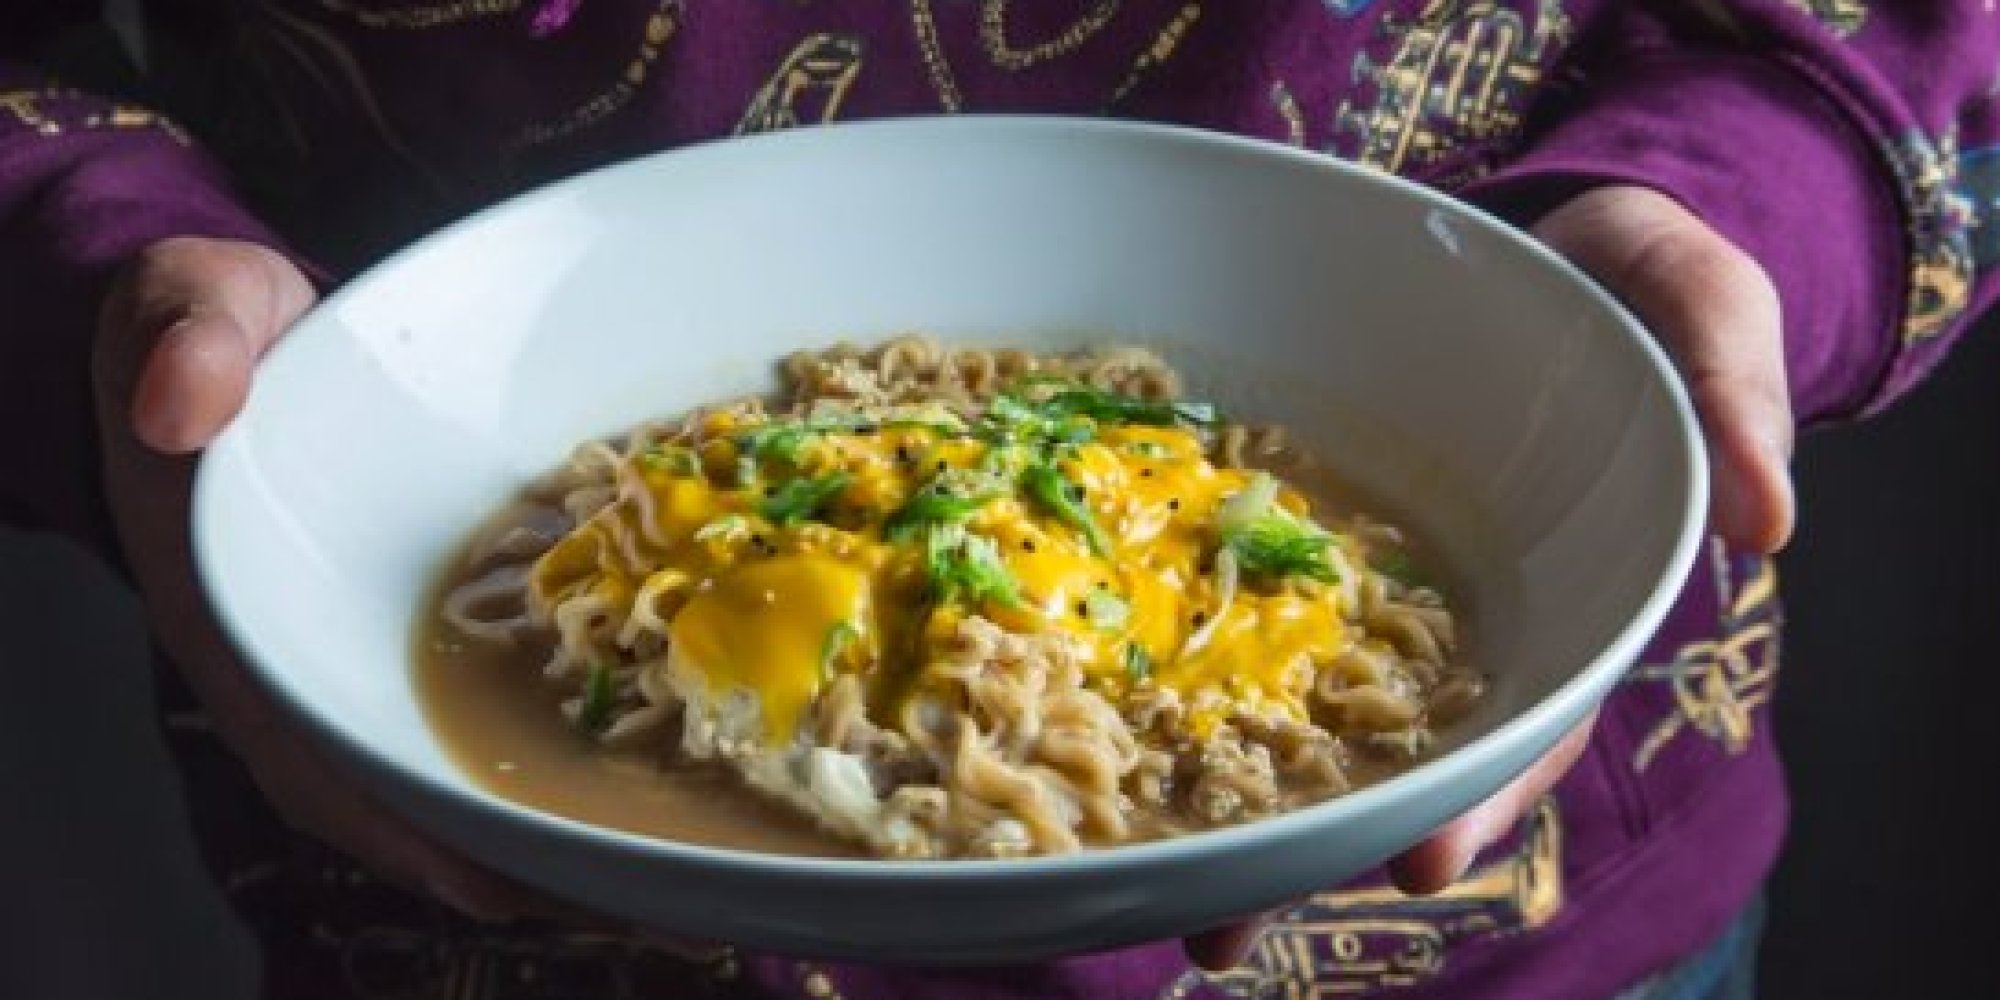 The Food That Transcends Social Boundaries: Ramen Noodles